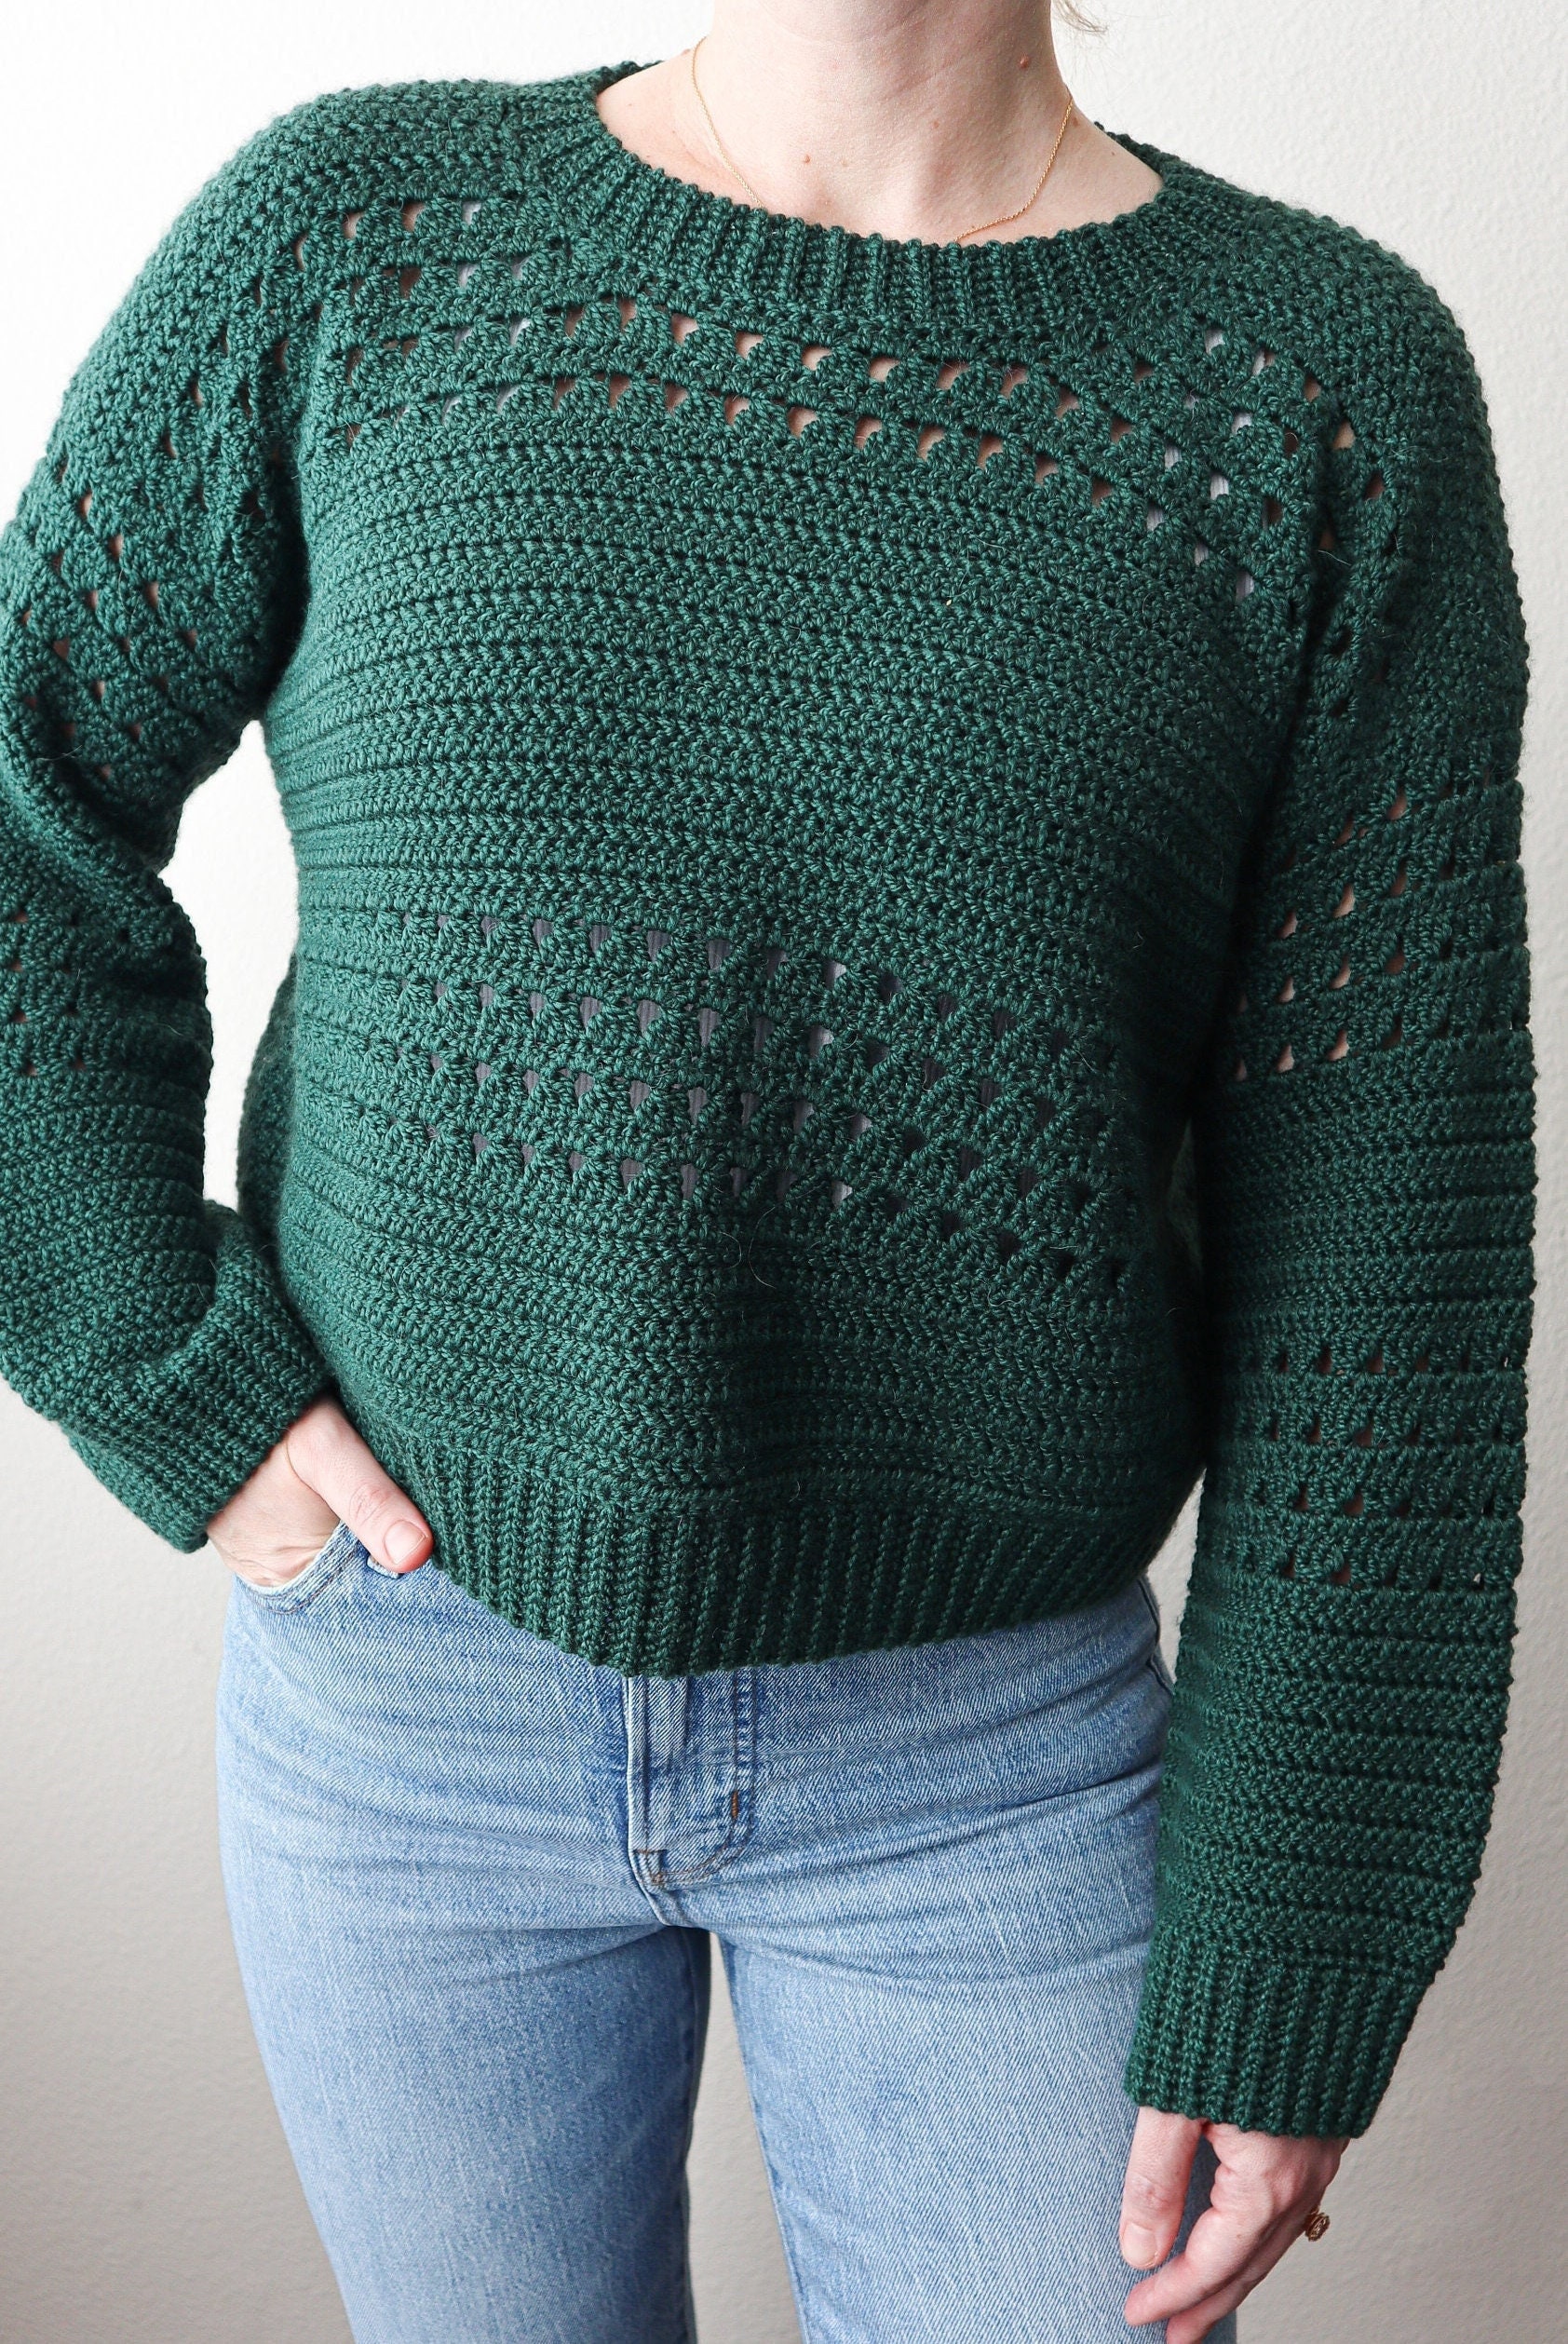 CROCHET PATTERN // Modern Easy Crochet Sweater Pullover - Etsy UK